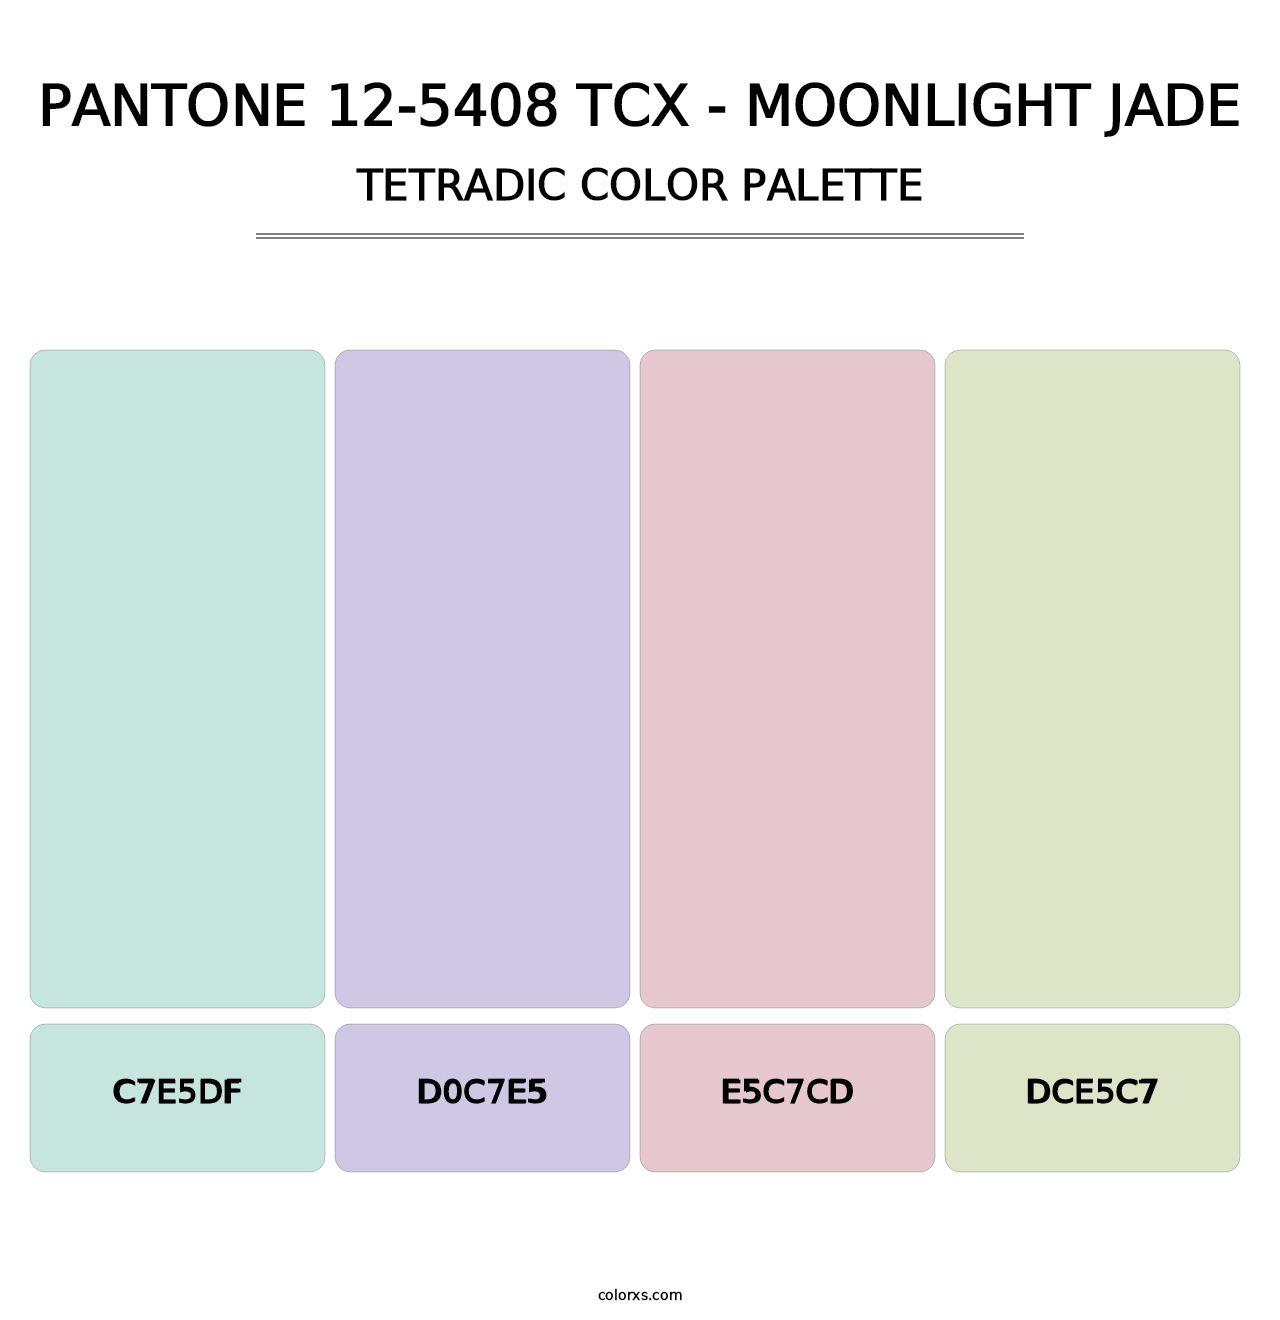 PANTONE 12-5408 TCX - Moonlight Jade - Tetradic Color Palette